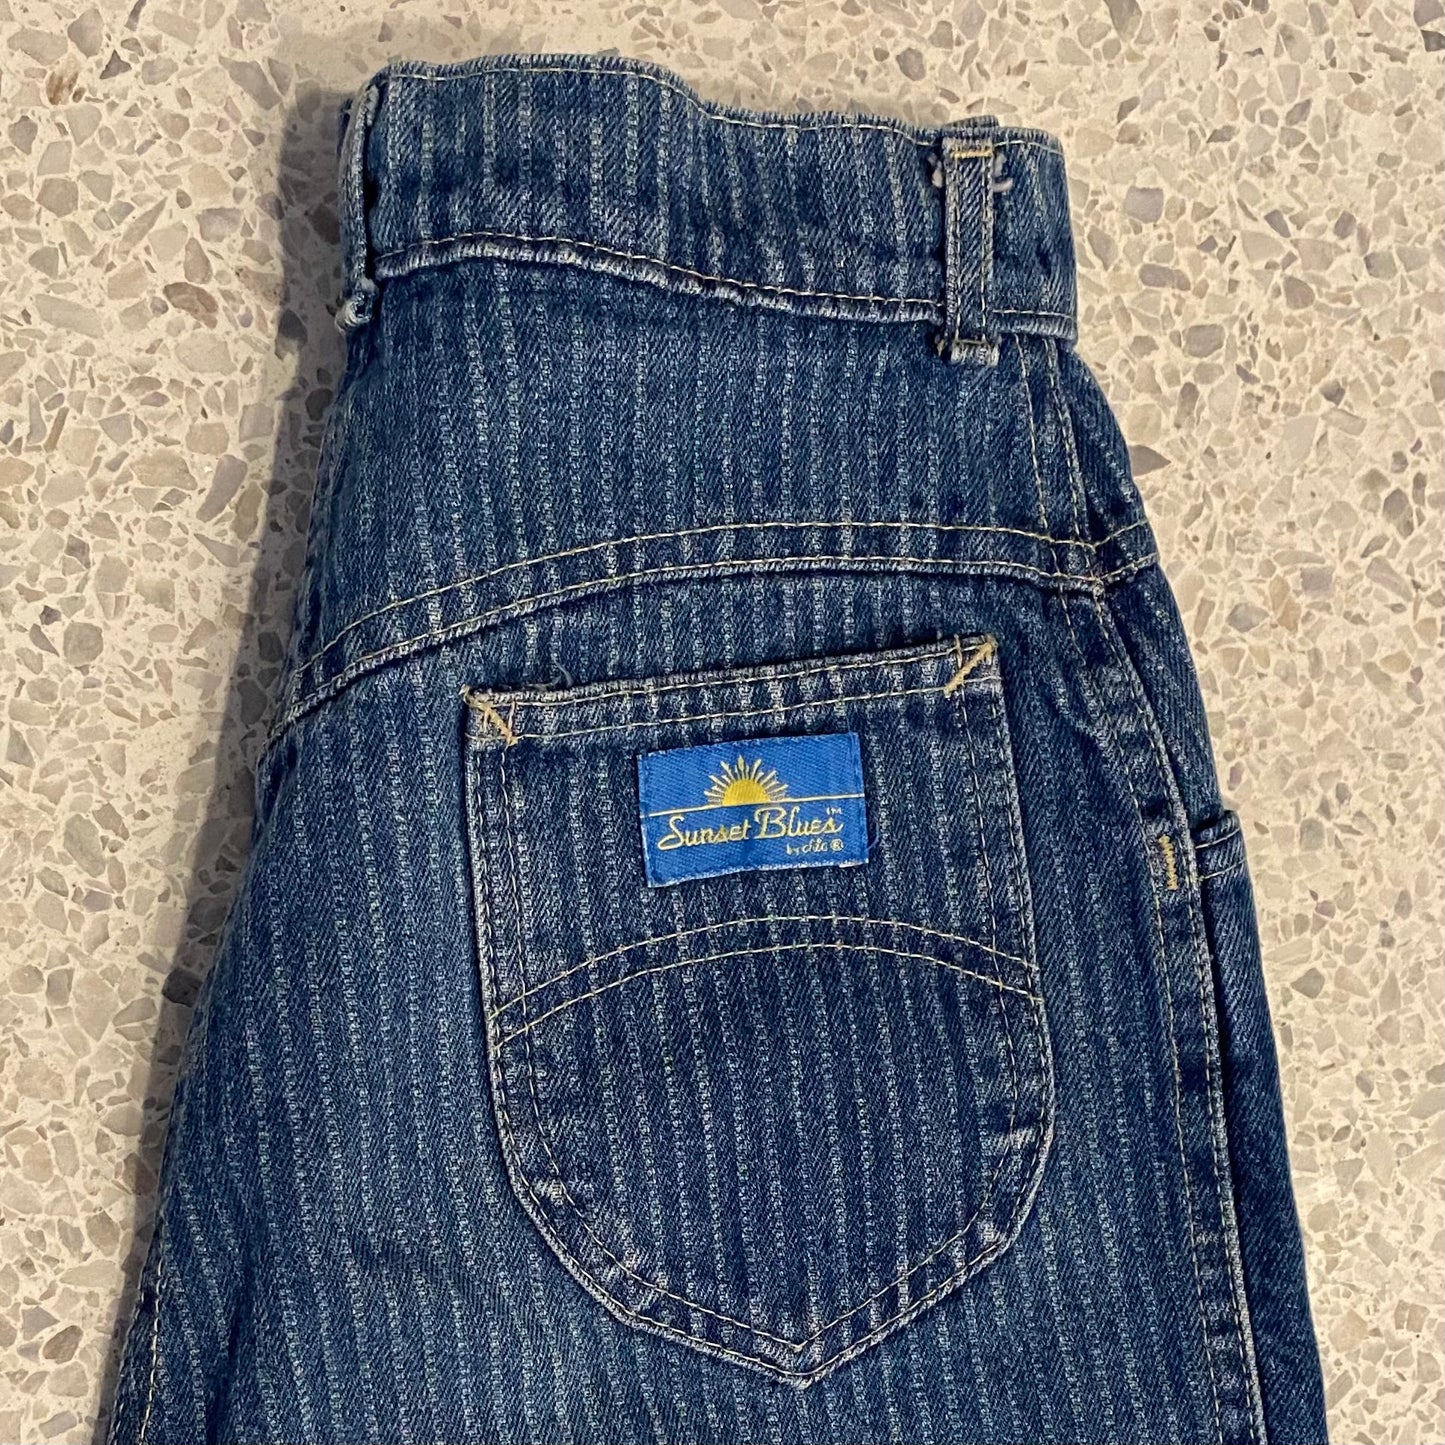 1980s Chic, Sunset Blues Denim Jeans